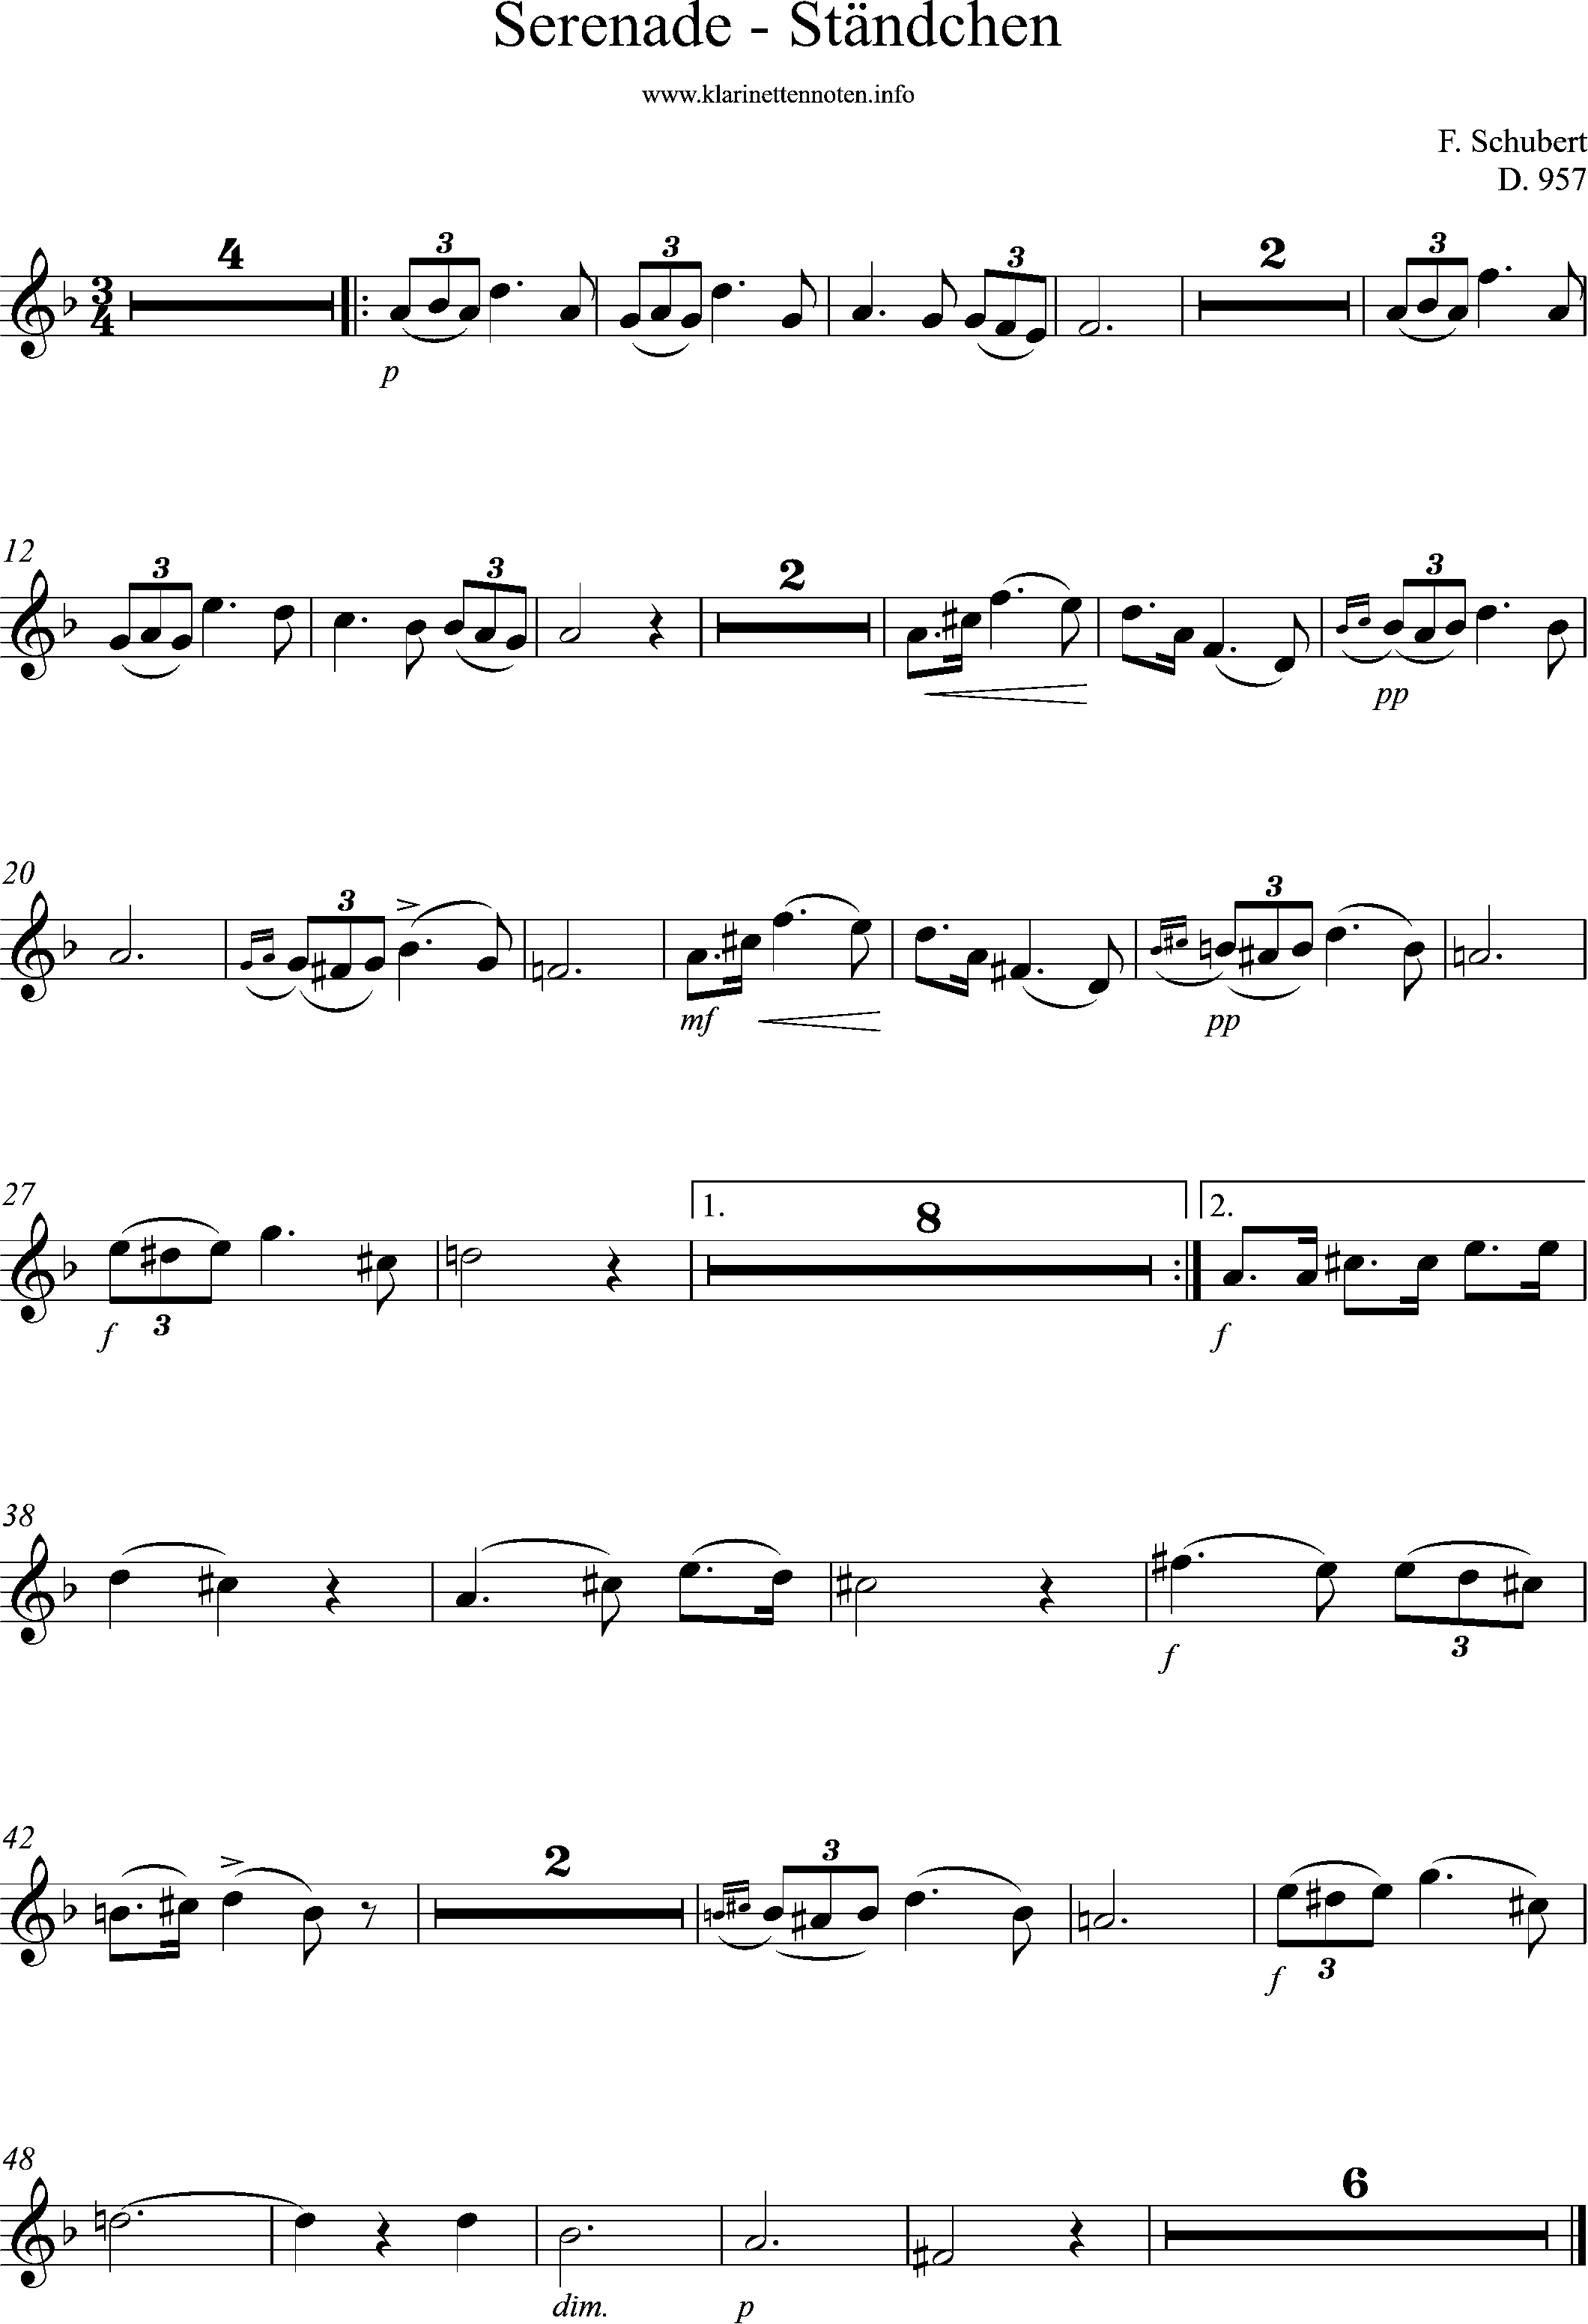 Solostimme Schubert serenade d957, Ständchen